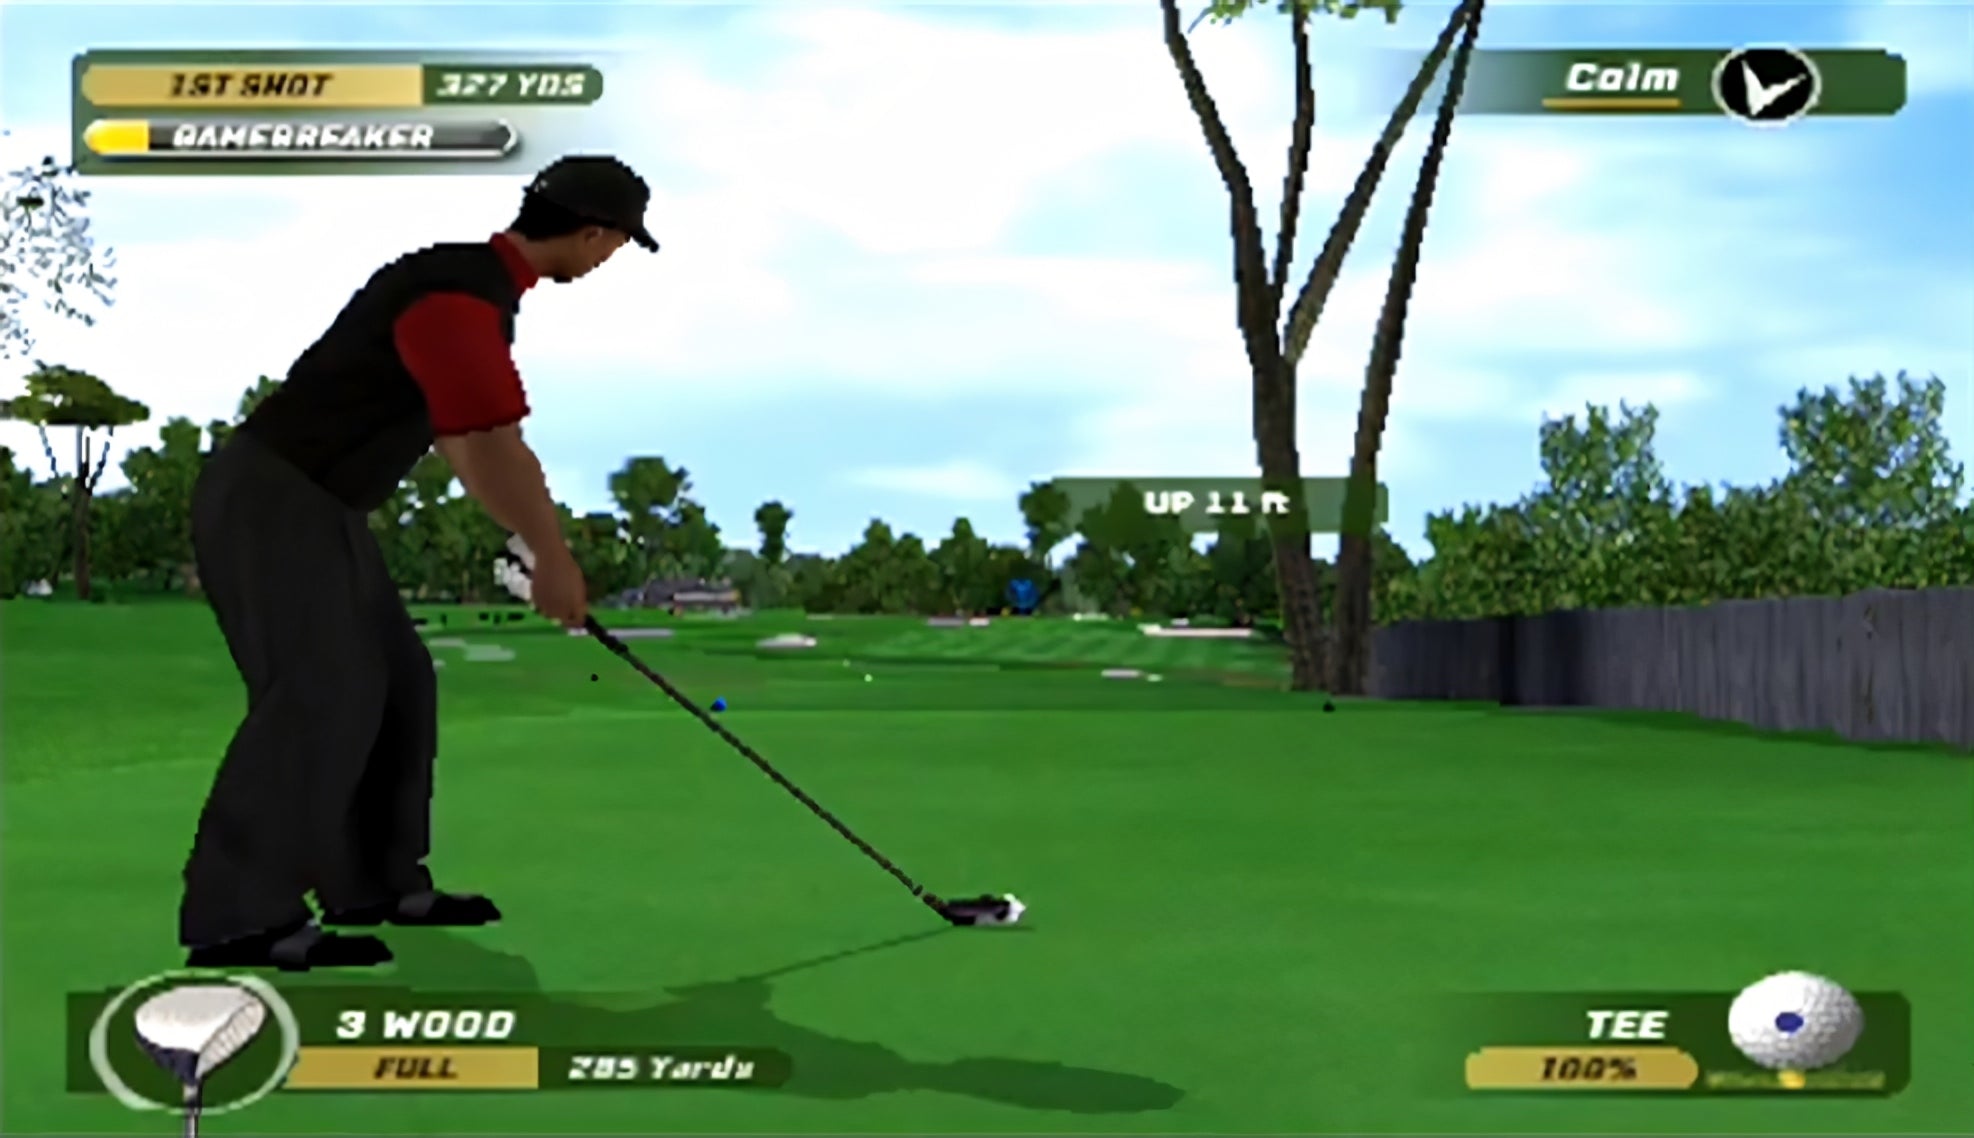 Tiger Woods PGA Tour 06 - PlayStation 2 (PS2) Game